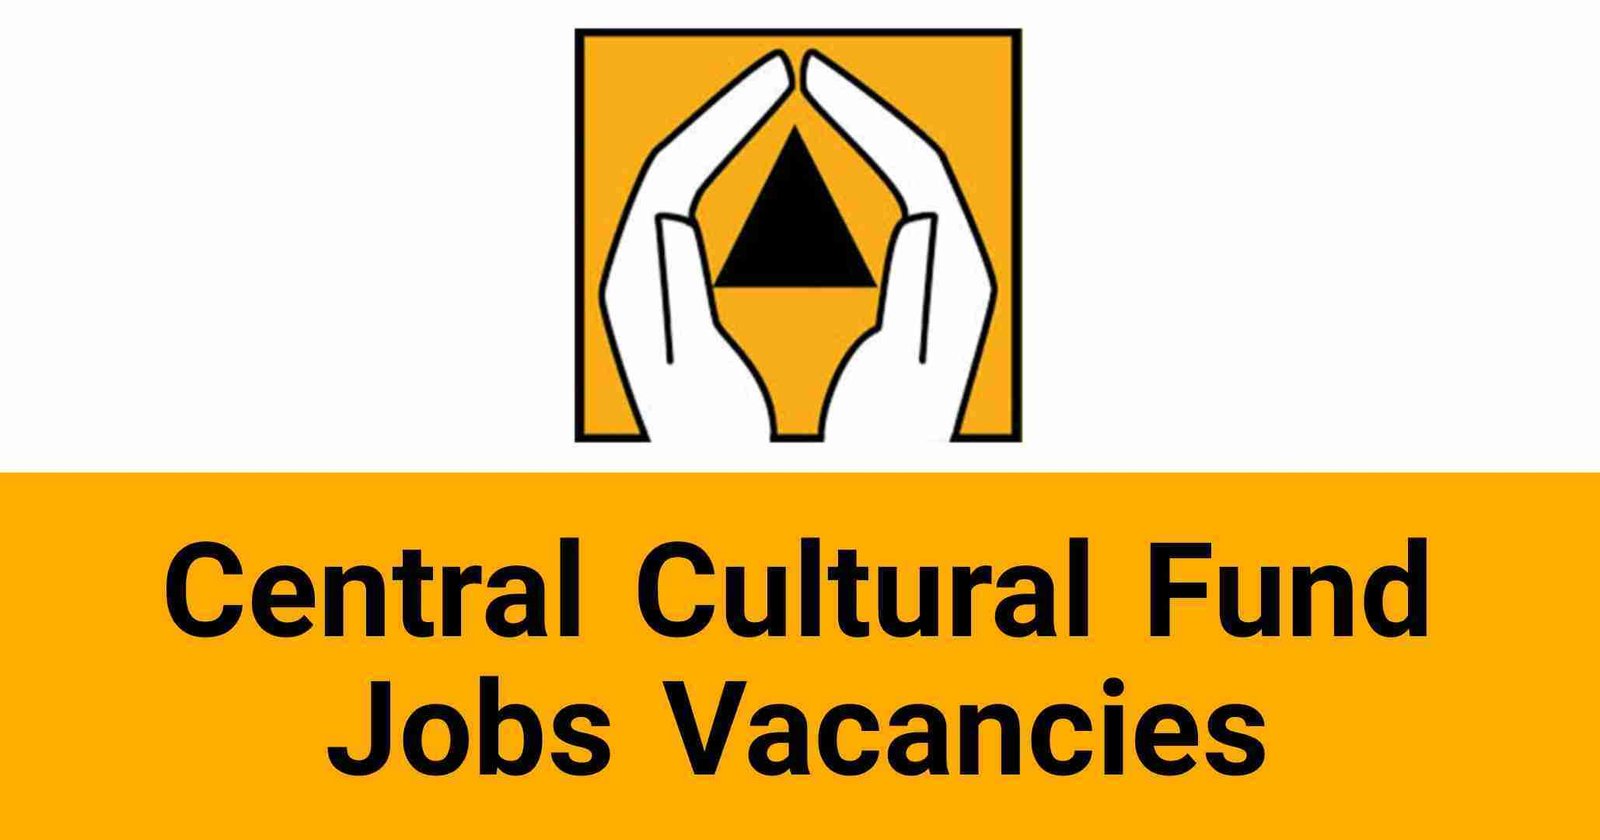 Central Cultural Fund Jobs Vacancies